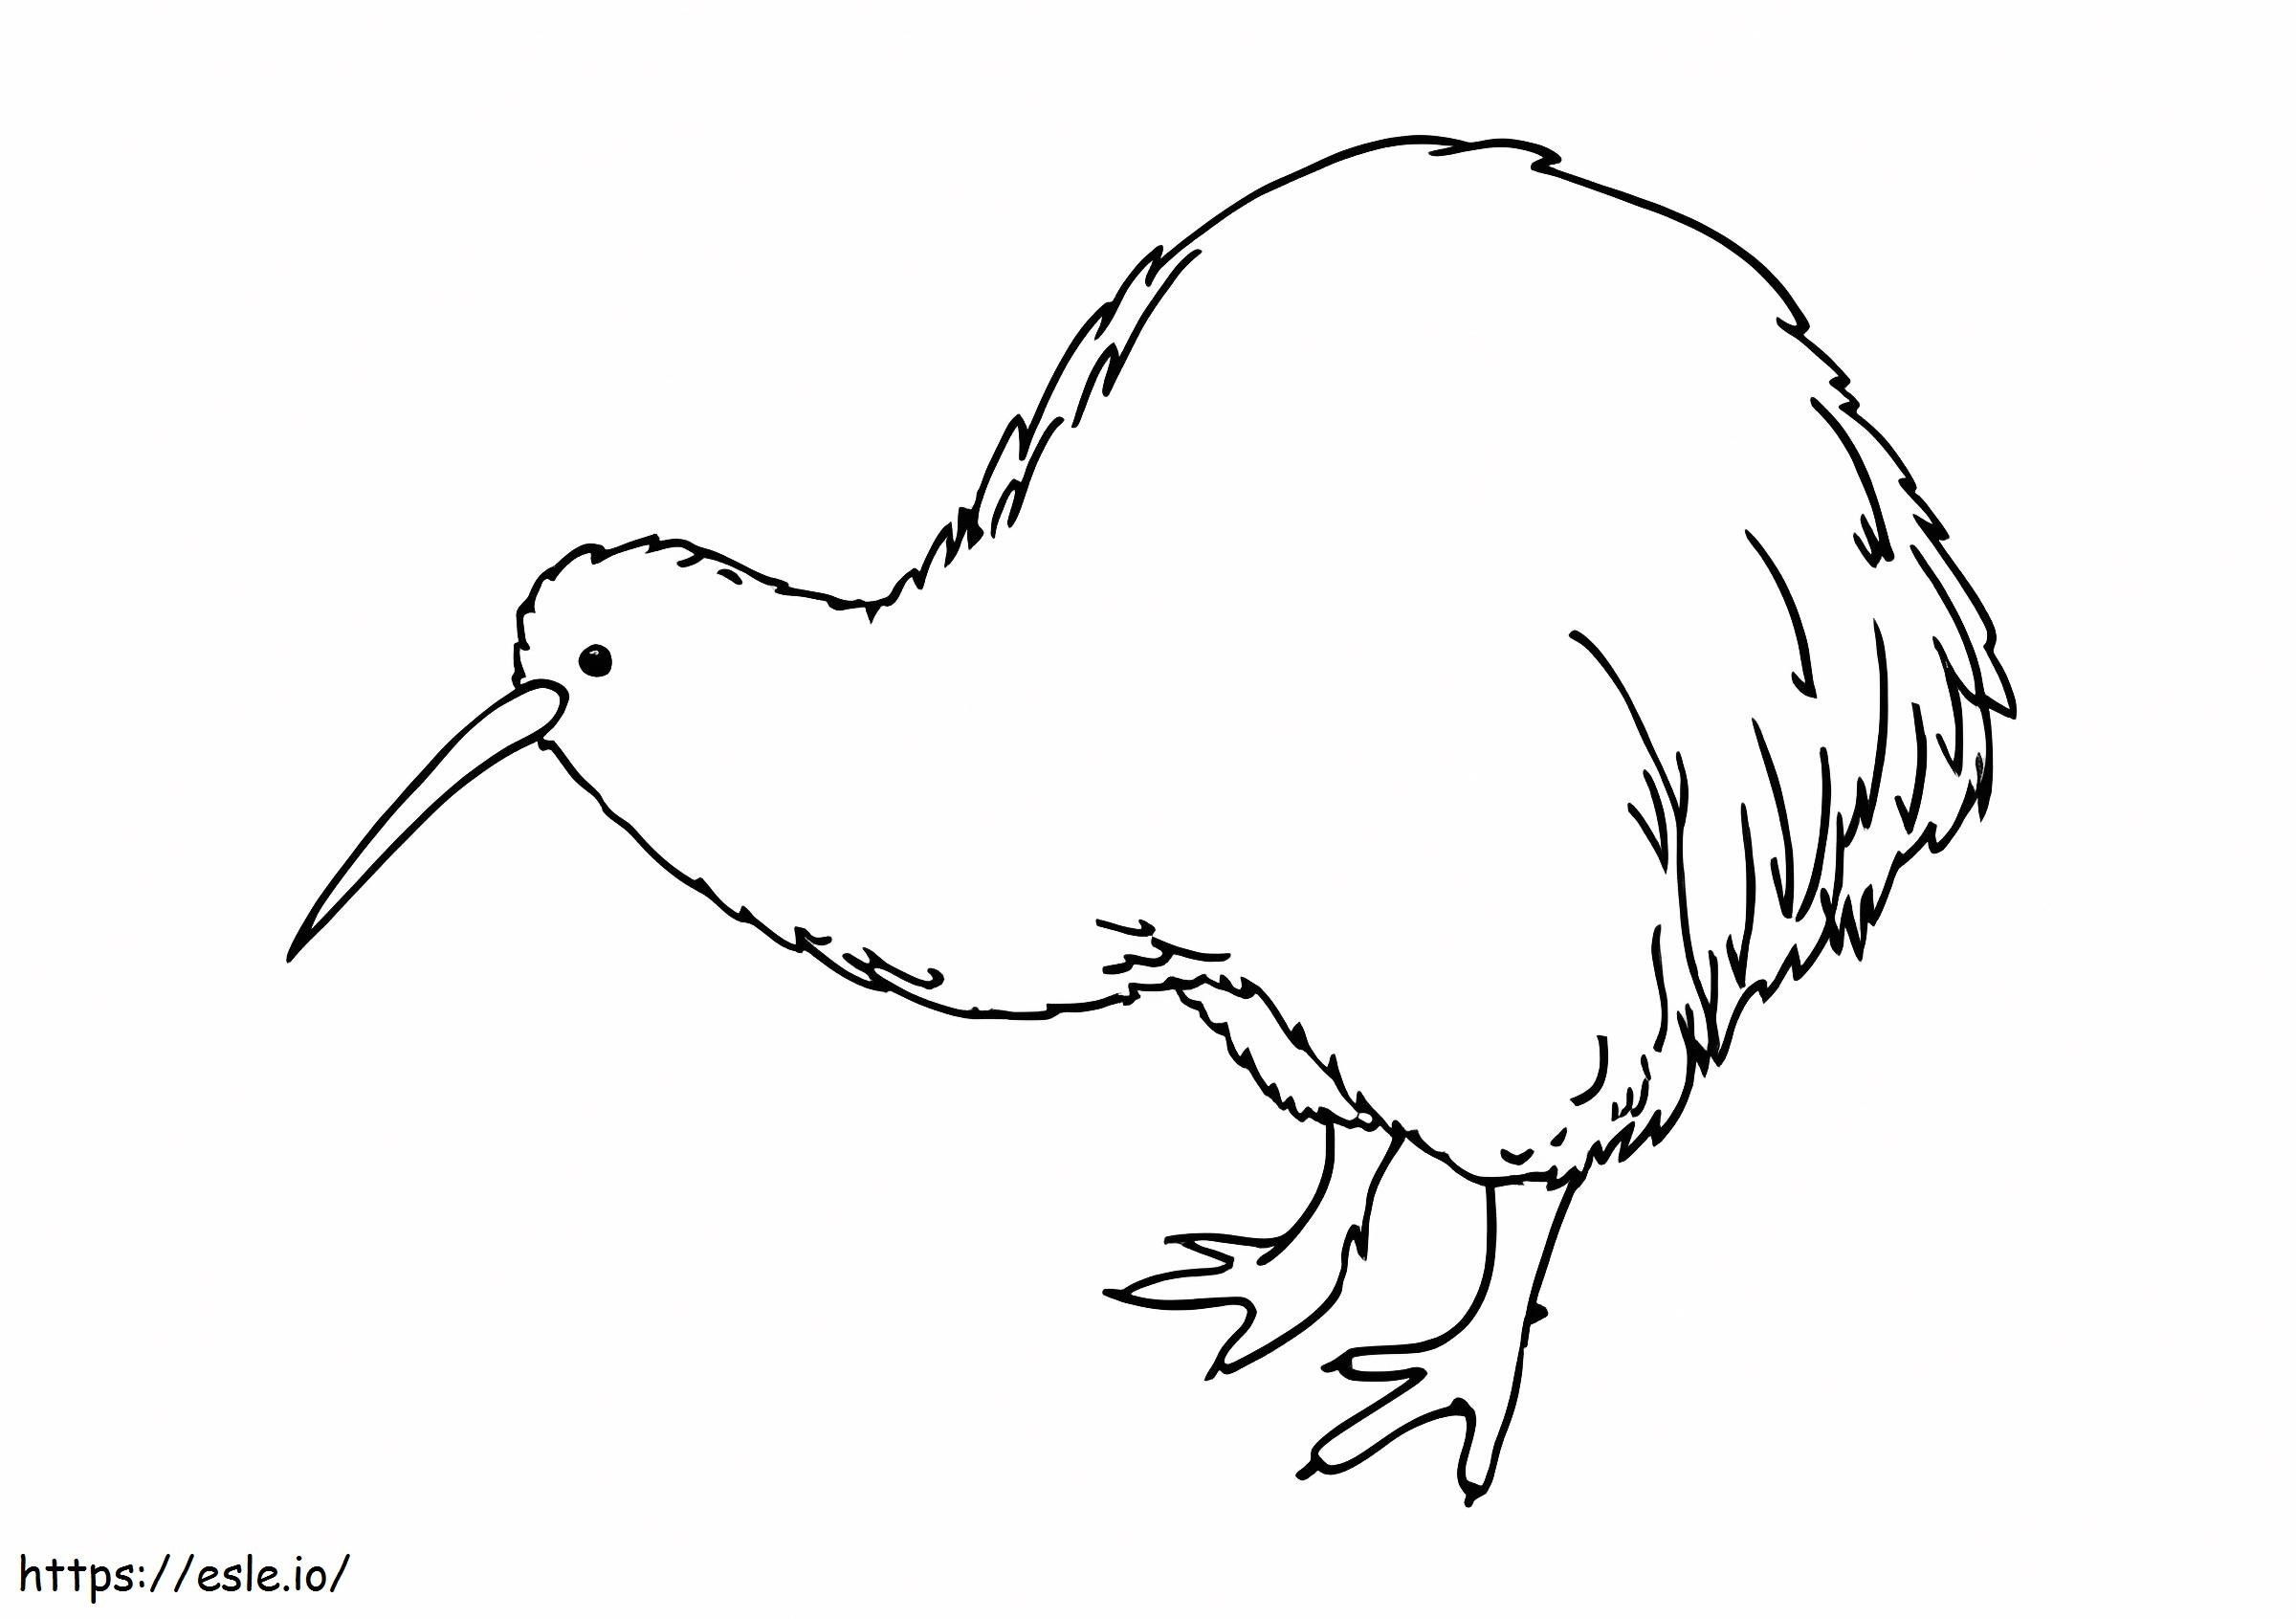 Coloriage Superbe oiseau kiwi à imprimer dessin